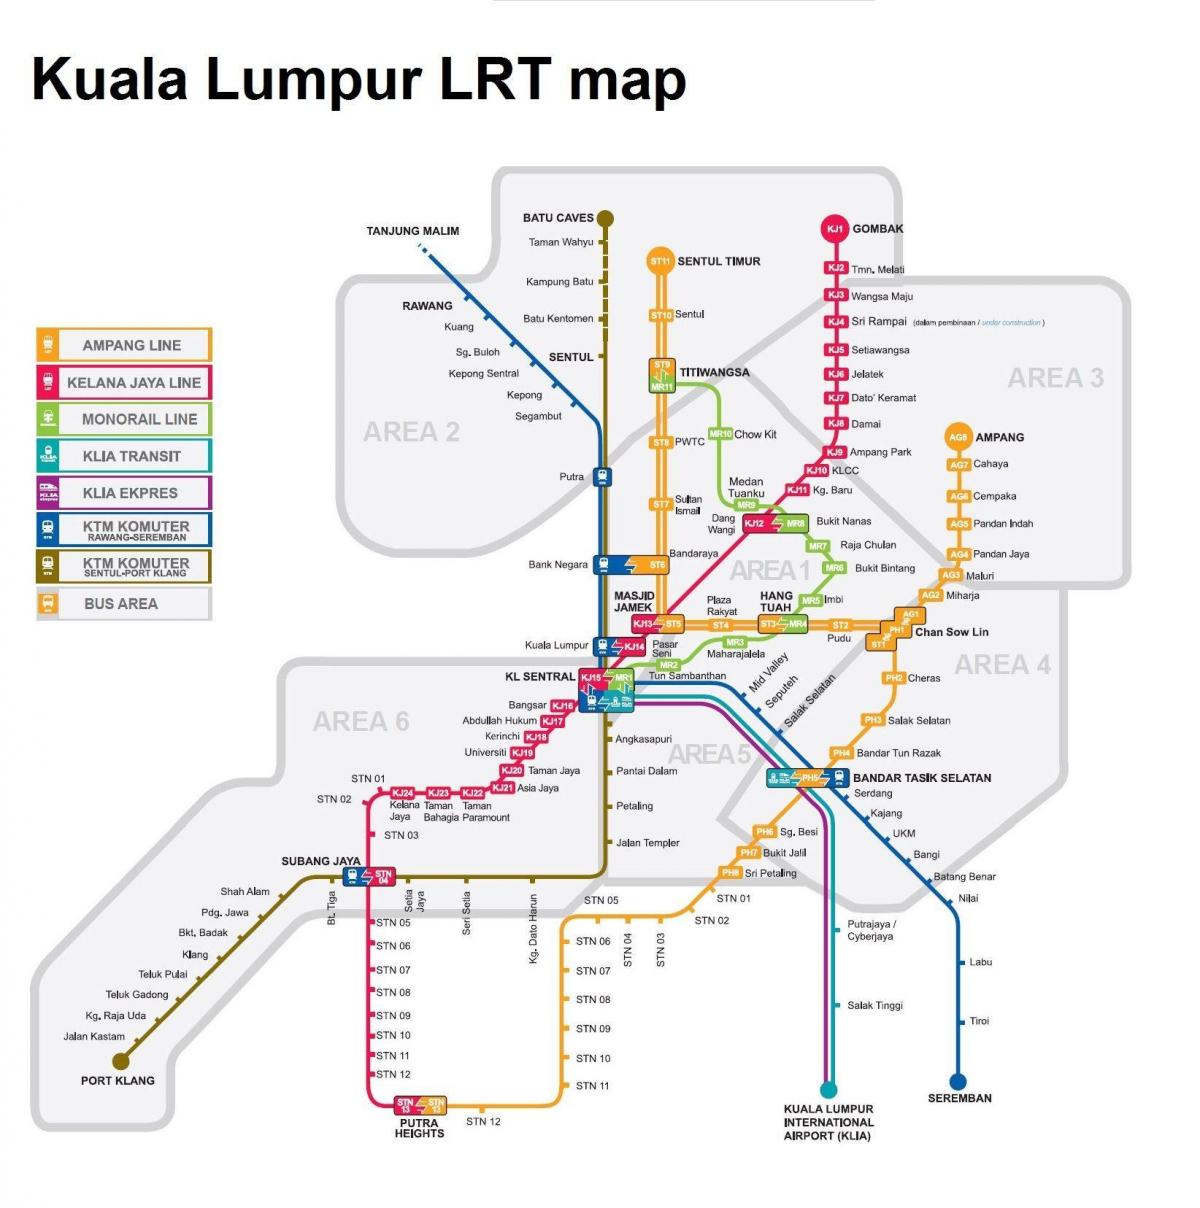 lrt mapa malaisia 2016